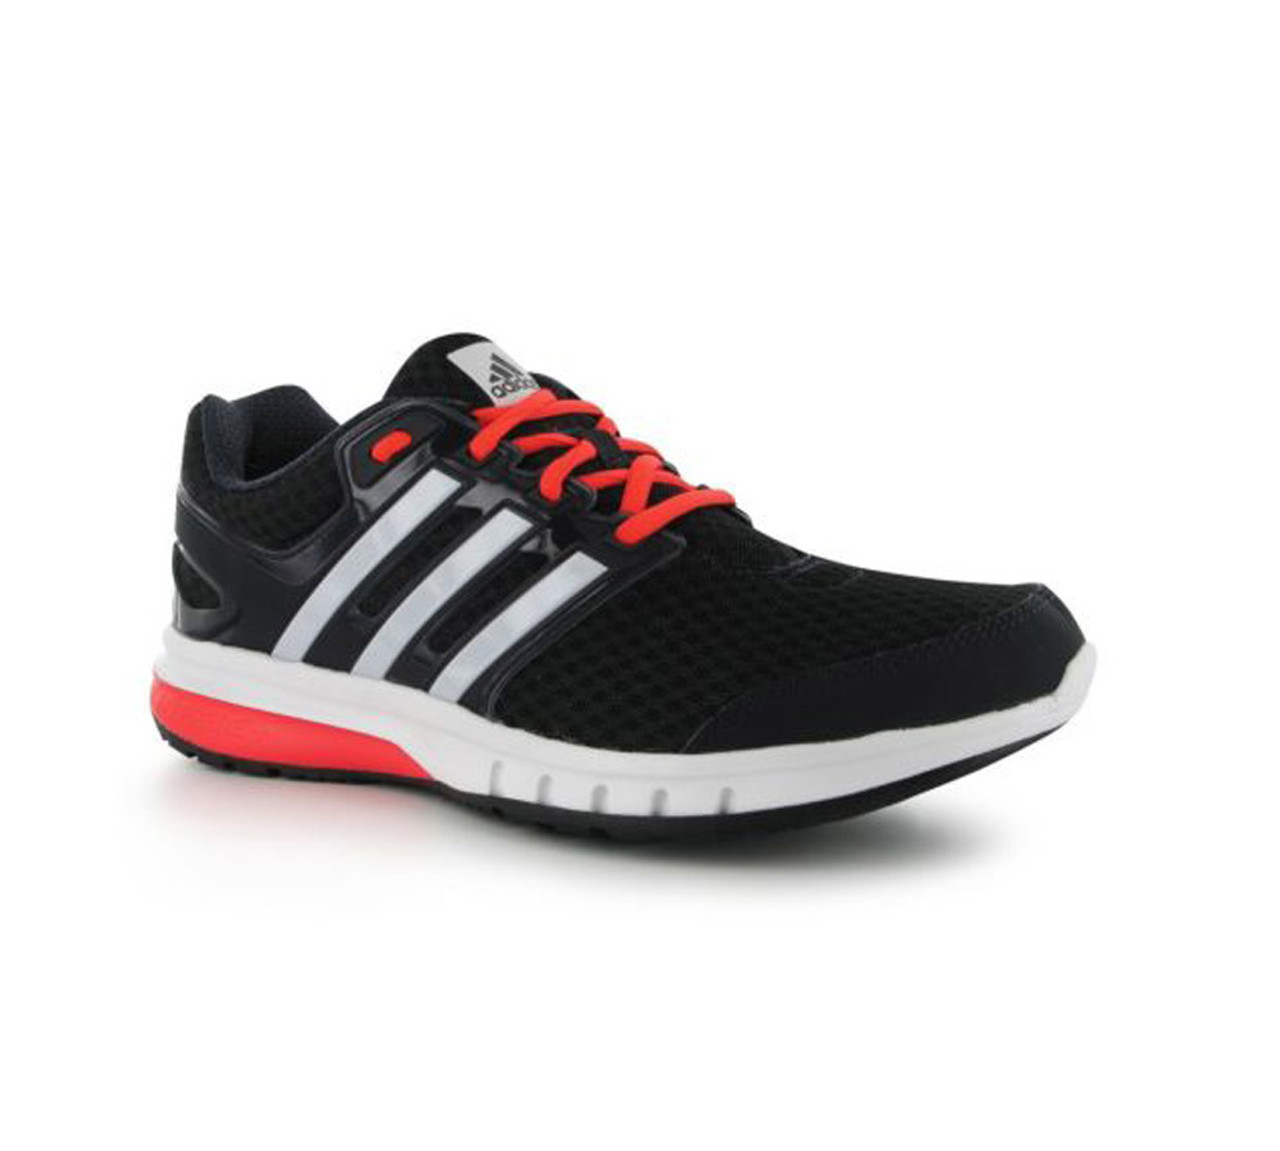 Men's Elite FF Running Shoe - | Discount Adidas Men's Athletic Shoes & More - Shoolu.com | Shoolu.com